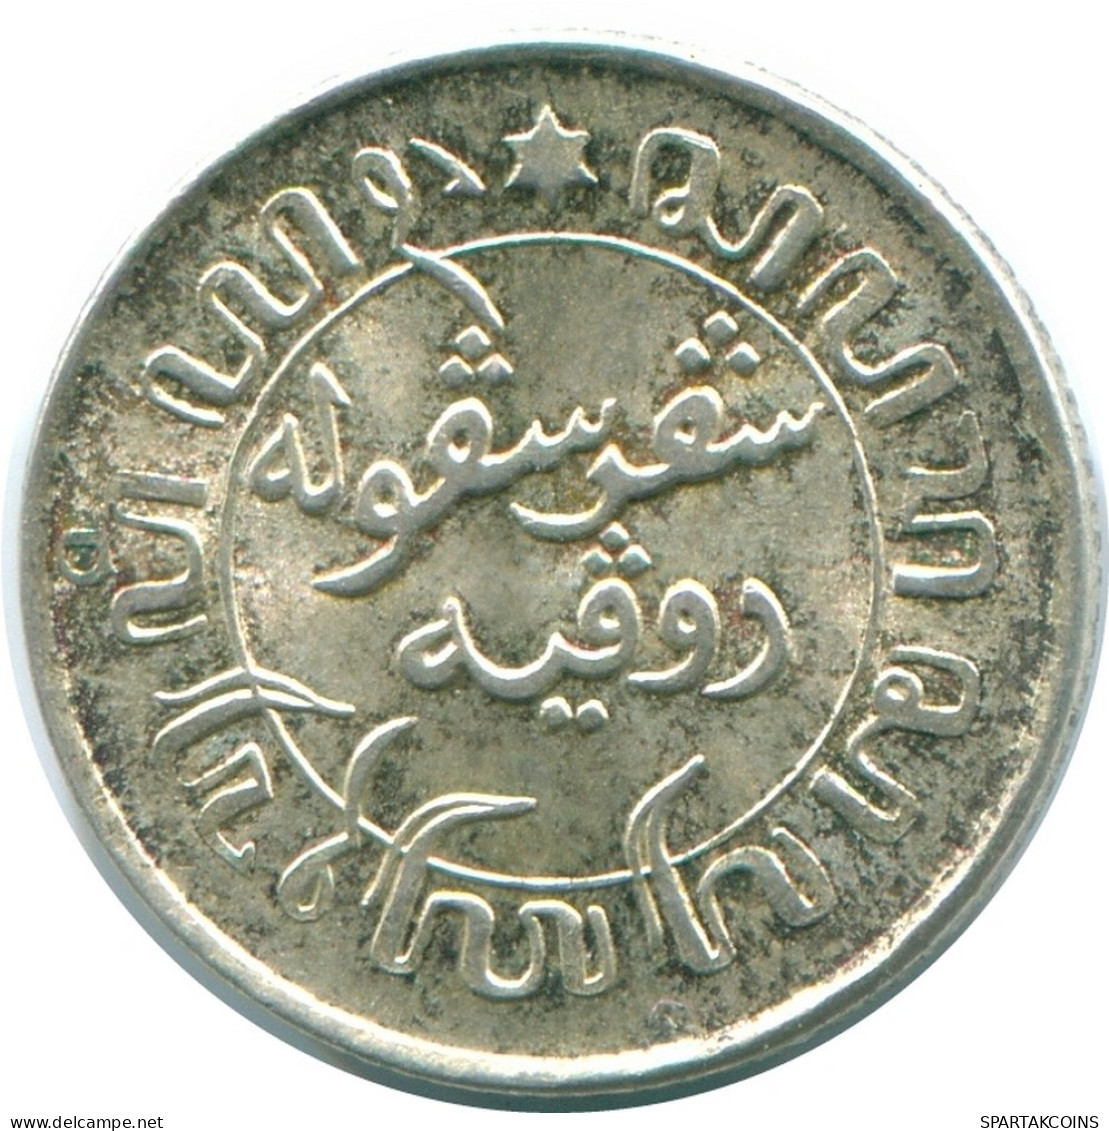 1/10 GULDEN 1945 S NETHERLANDS EAST INDIES SILVER Colonial Coin #NL14184.3.U.A - Indes Néerlandaises